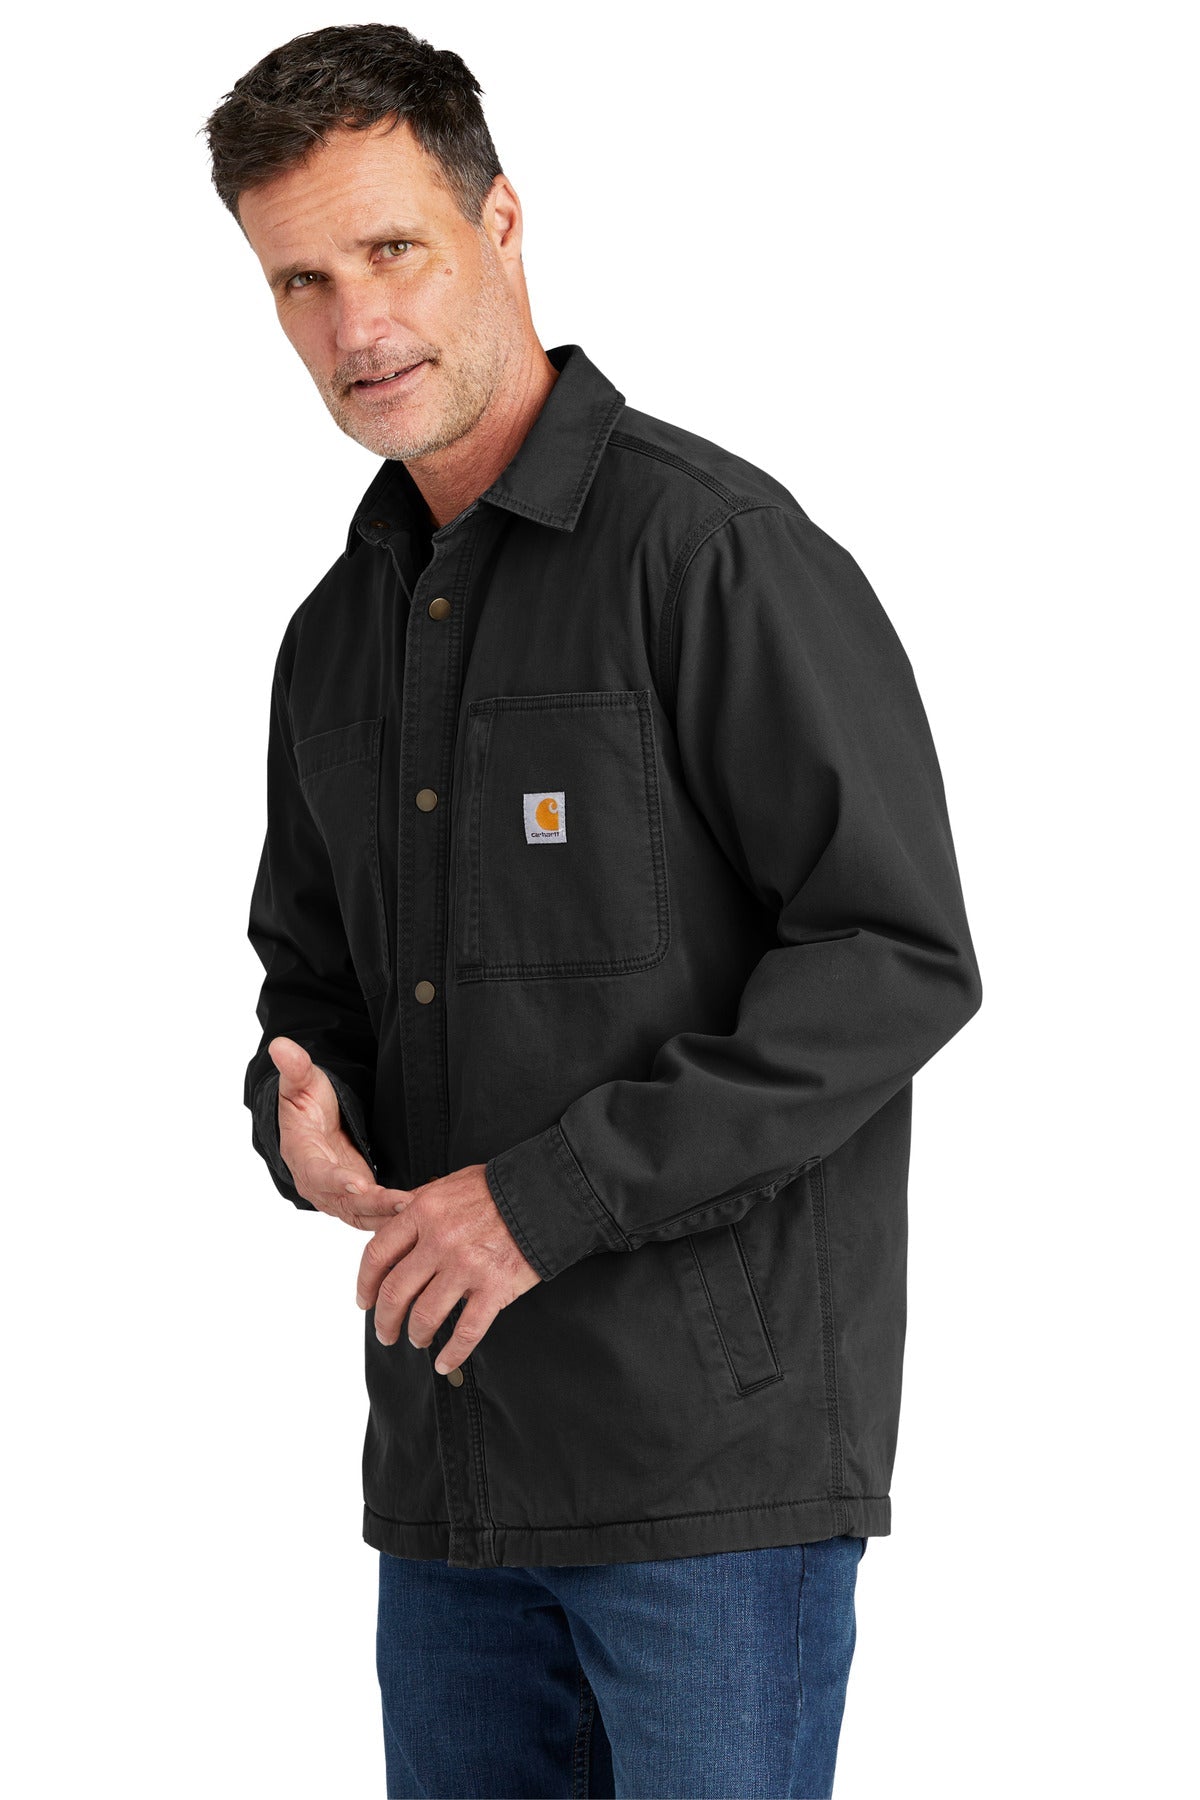 Carhartt® Rugged Flex® Fleece-Lined Shirt Jac CT105532 - DFW Impression